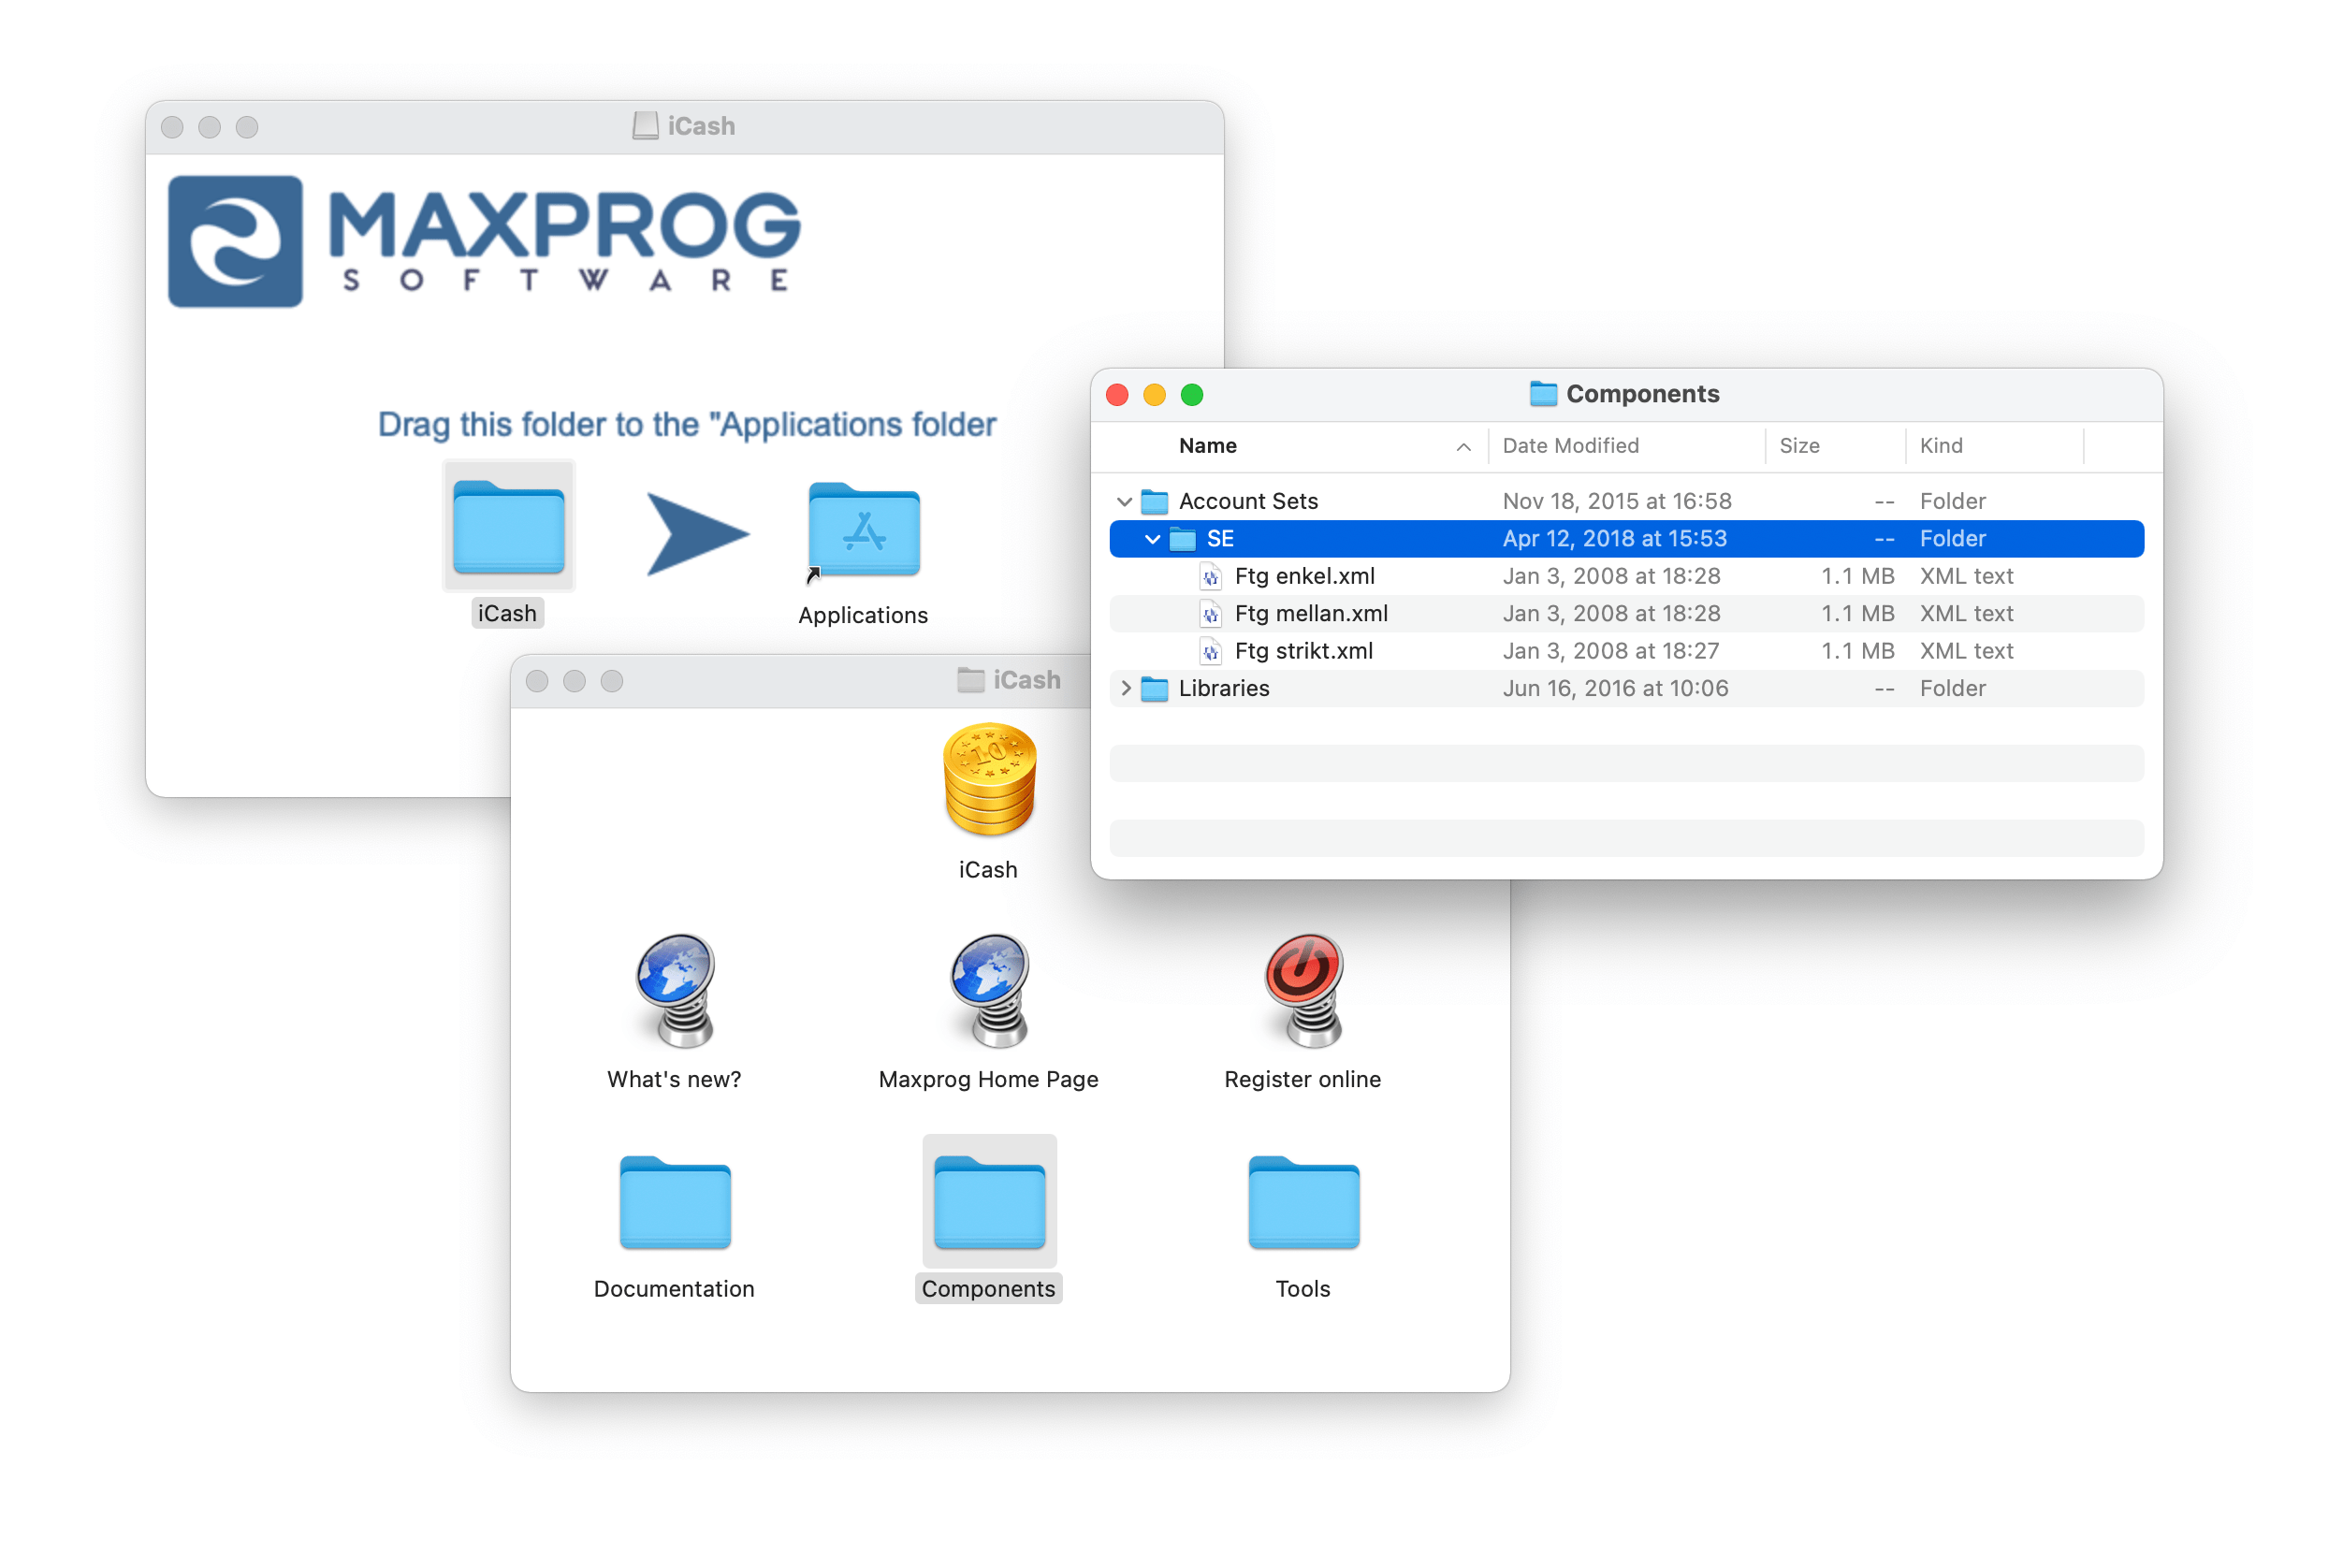 Maxprog iCash 7.8.7 instal the last version for ipod